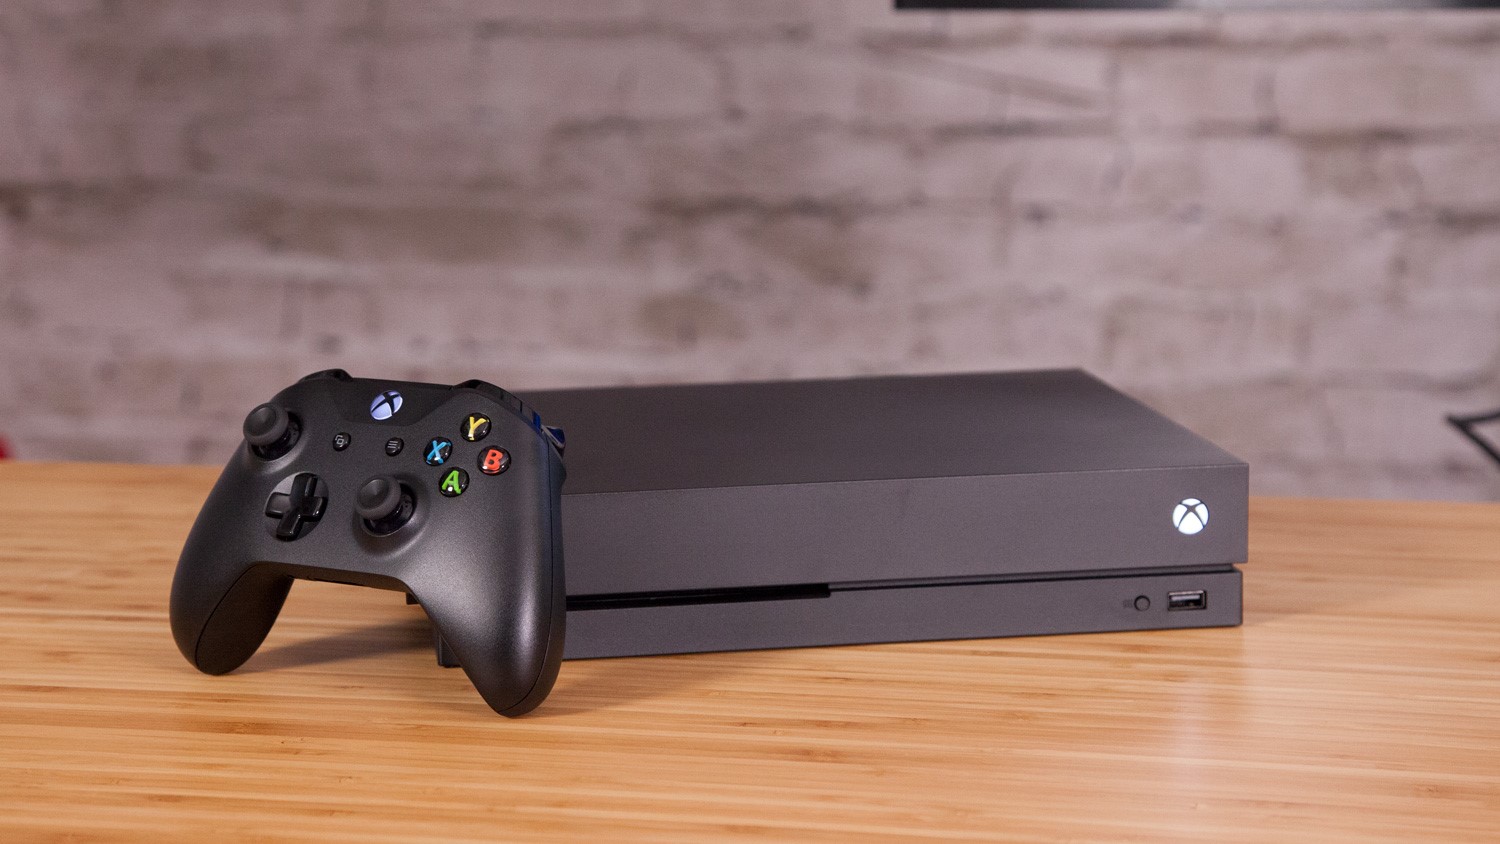 heilig Schandelijk Heb geleerd Where to buy an Xbox One: These retailers have the console in stock |  Laptop Mag